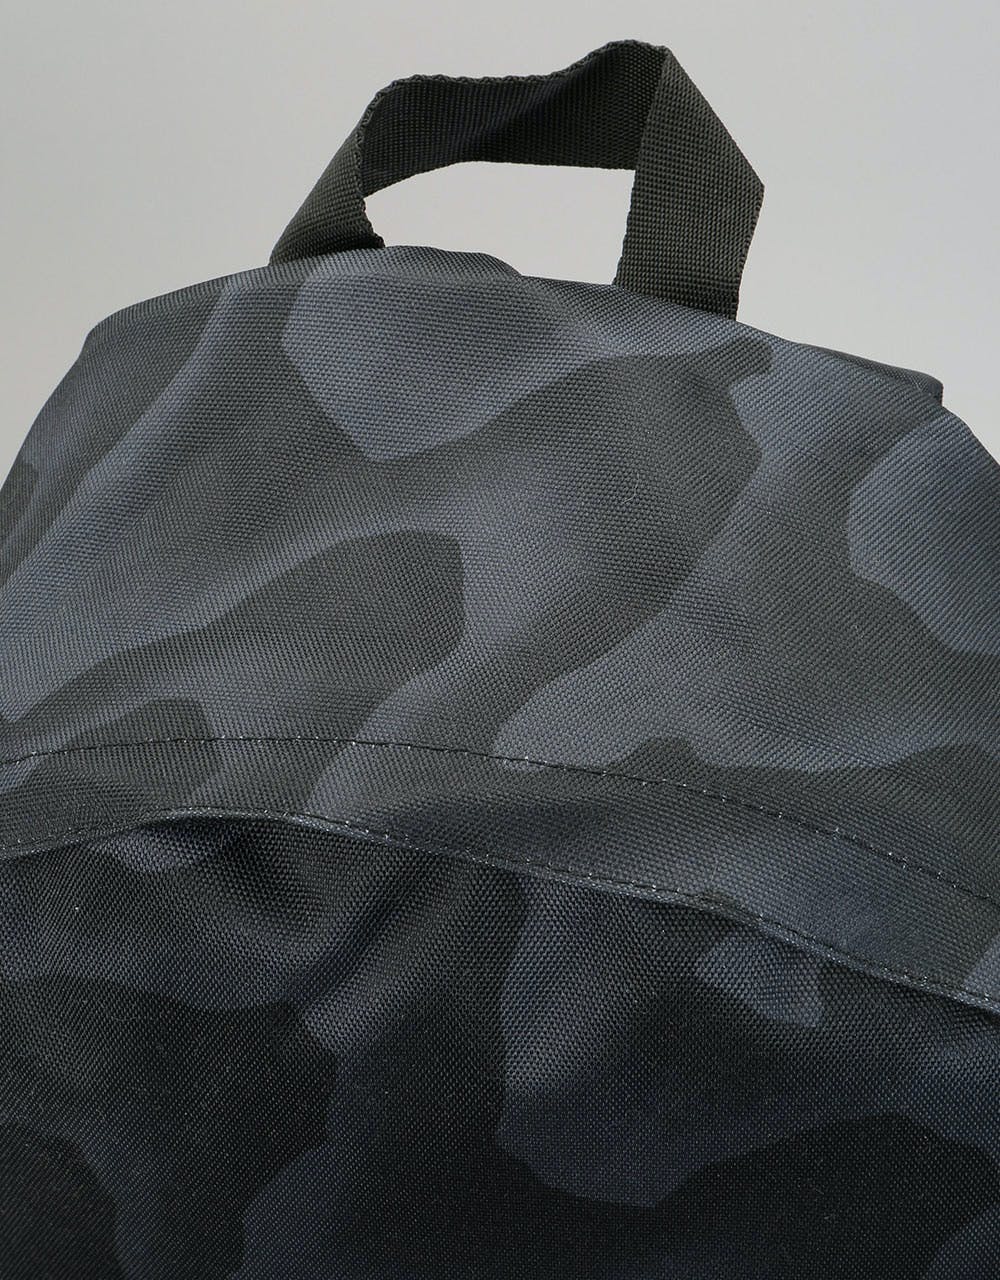 Adidas Warped Backpack - Multicolur